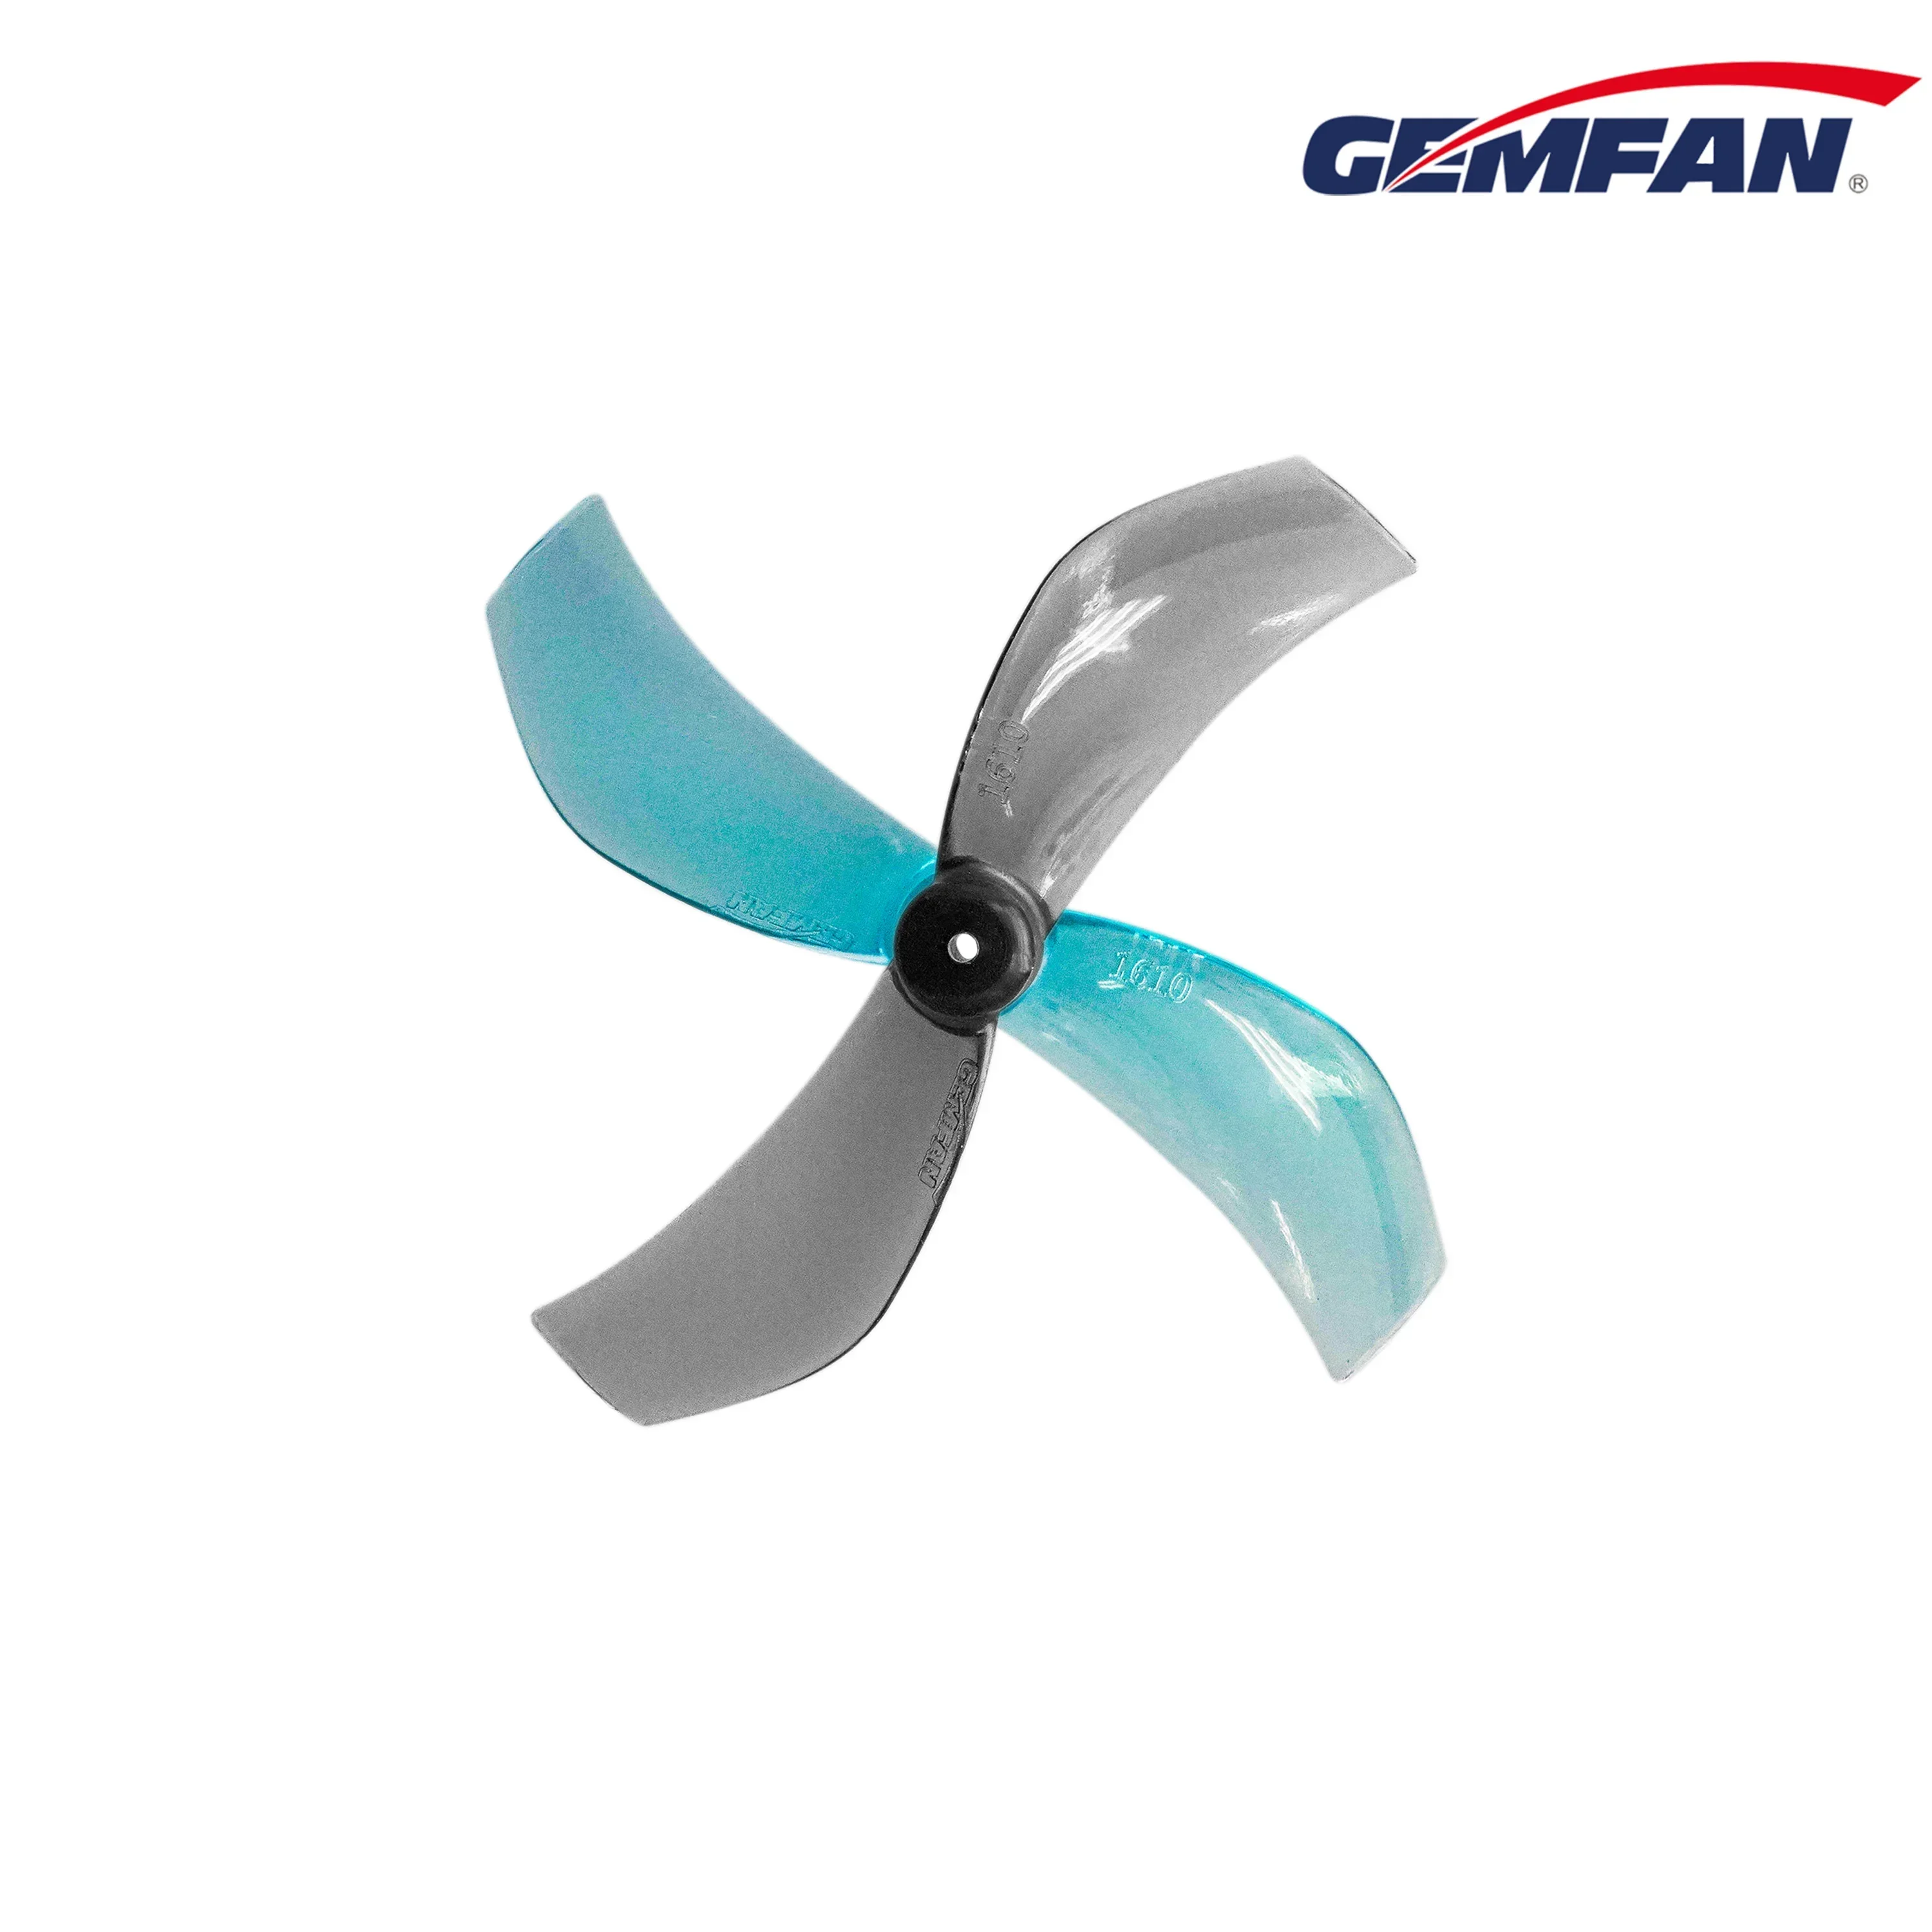 Gemfan 40MM 1610-2 Mix Color 1mm propeller